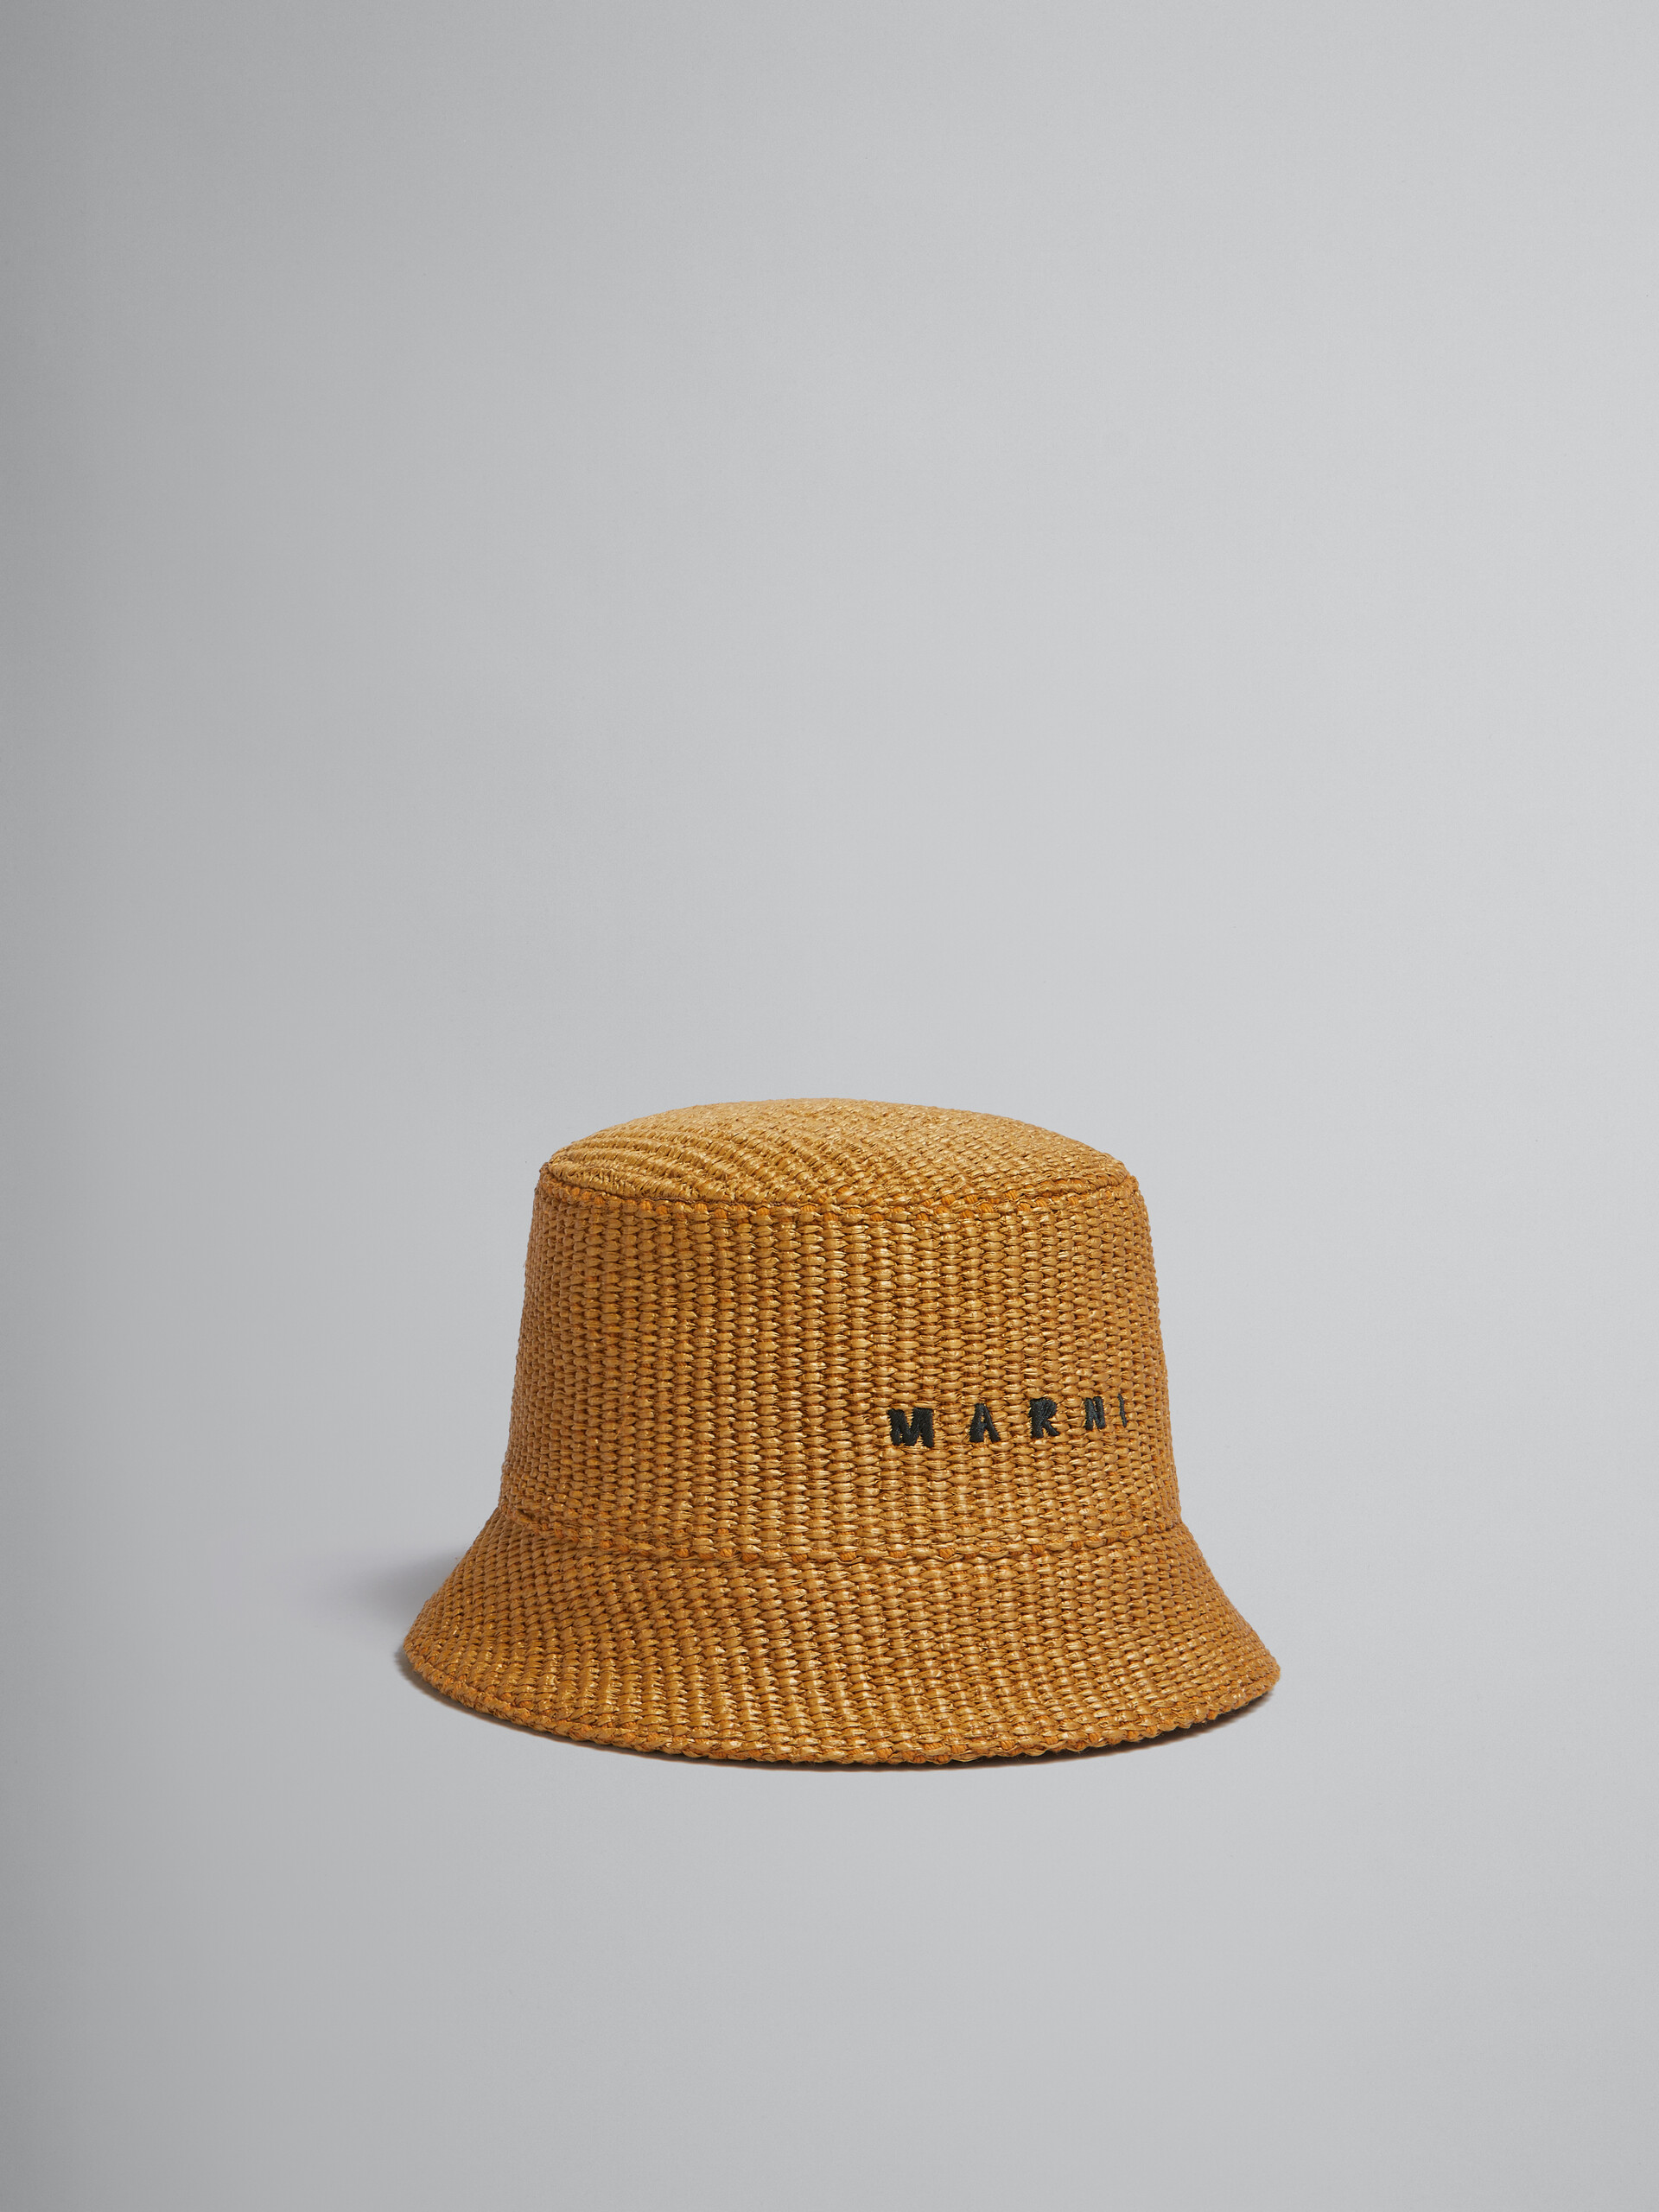 Gorro de pescador marrón de rafia con logotipo bordado - Sombrero - Image 1